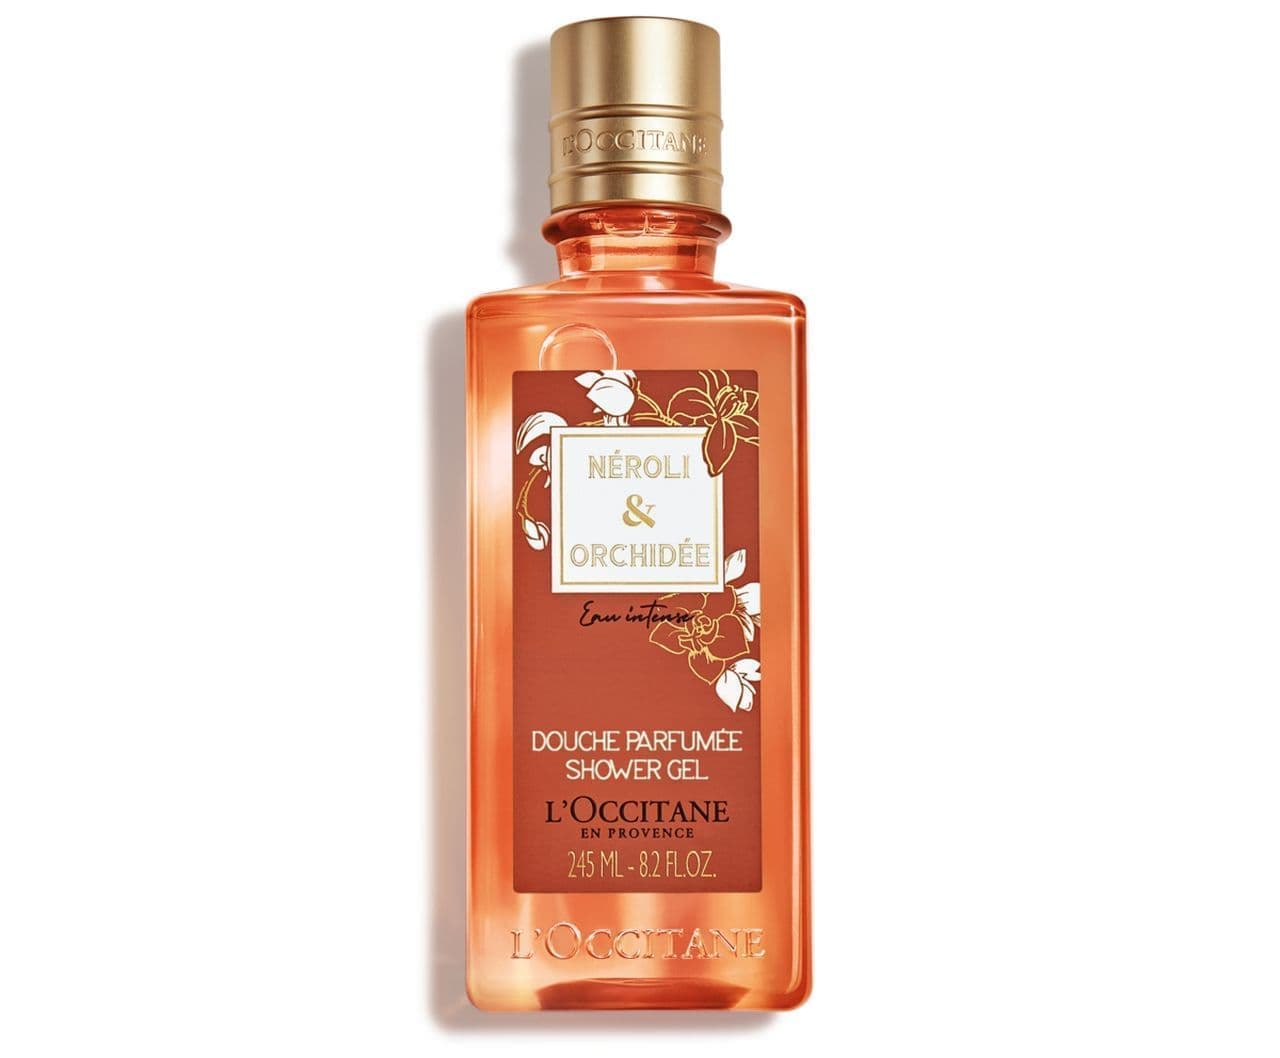 L'Occitane "Grace Orchidee Parfum Shower Gel